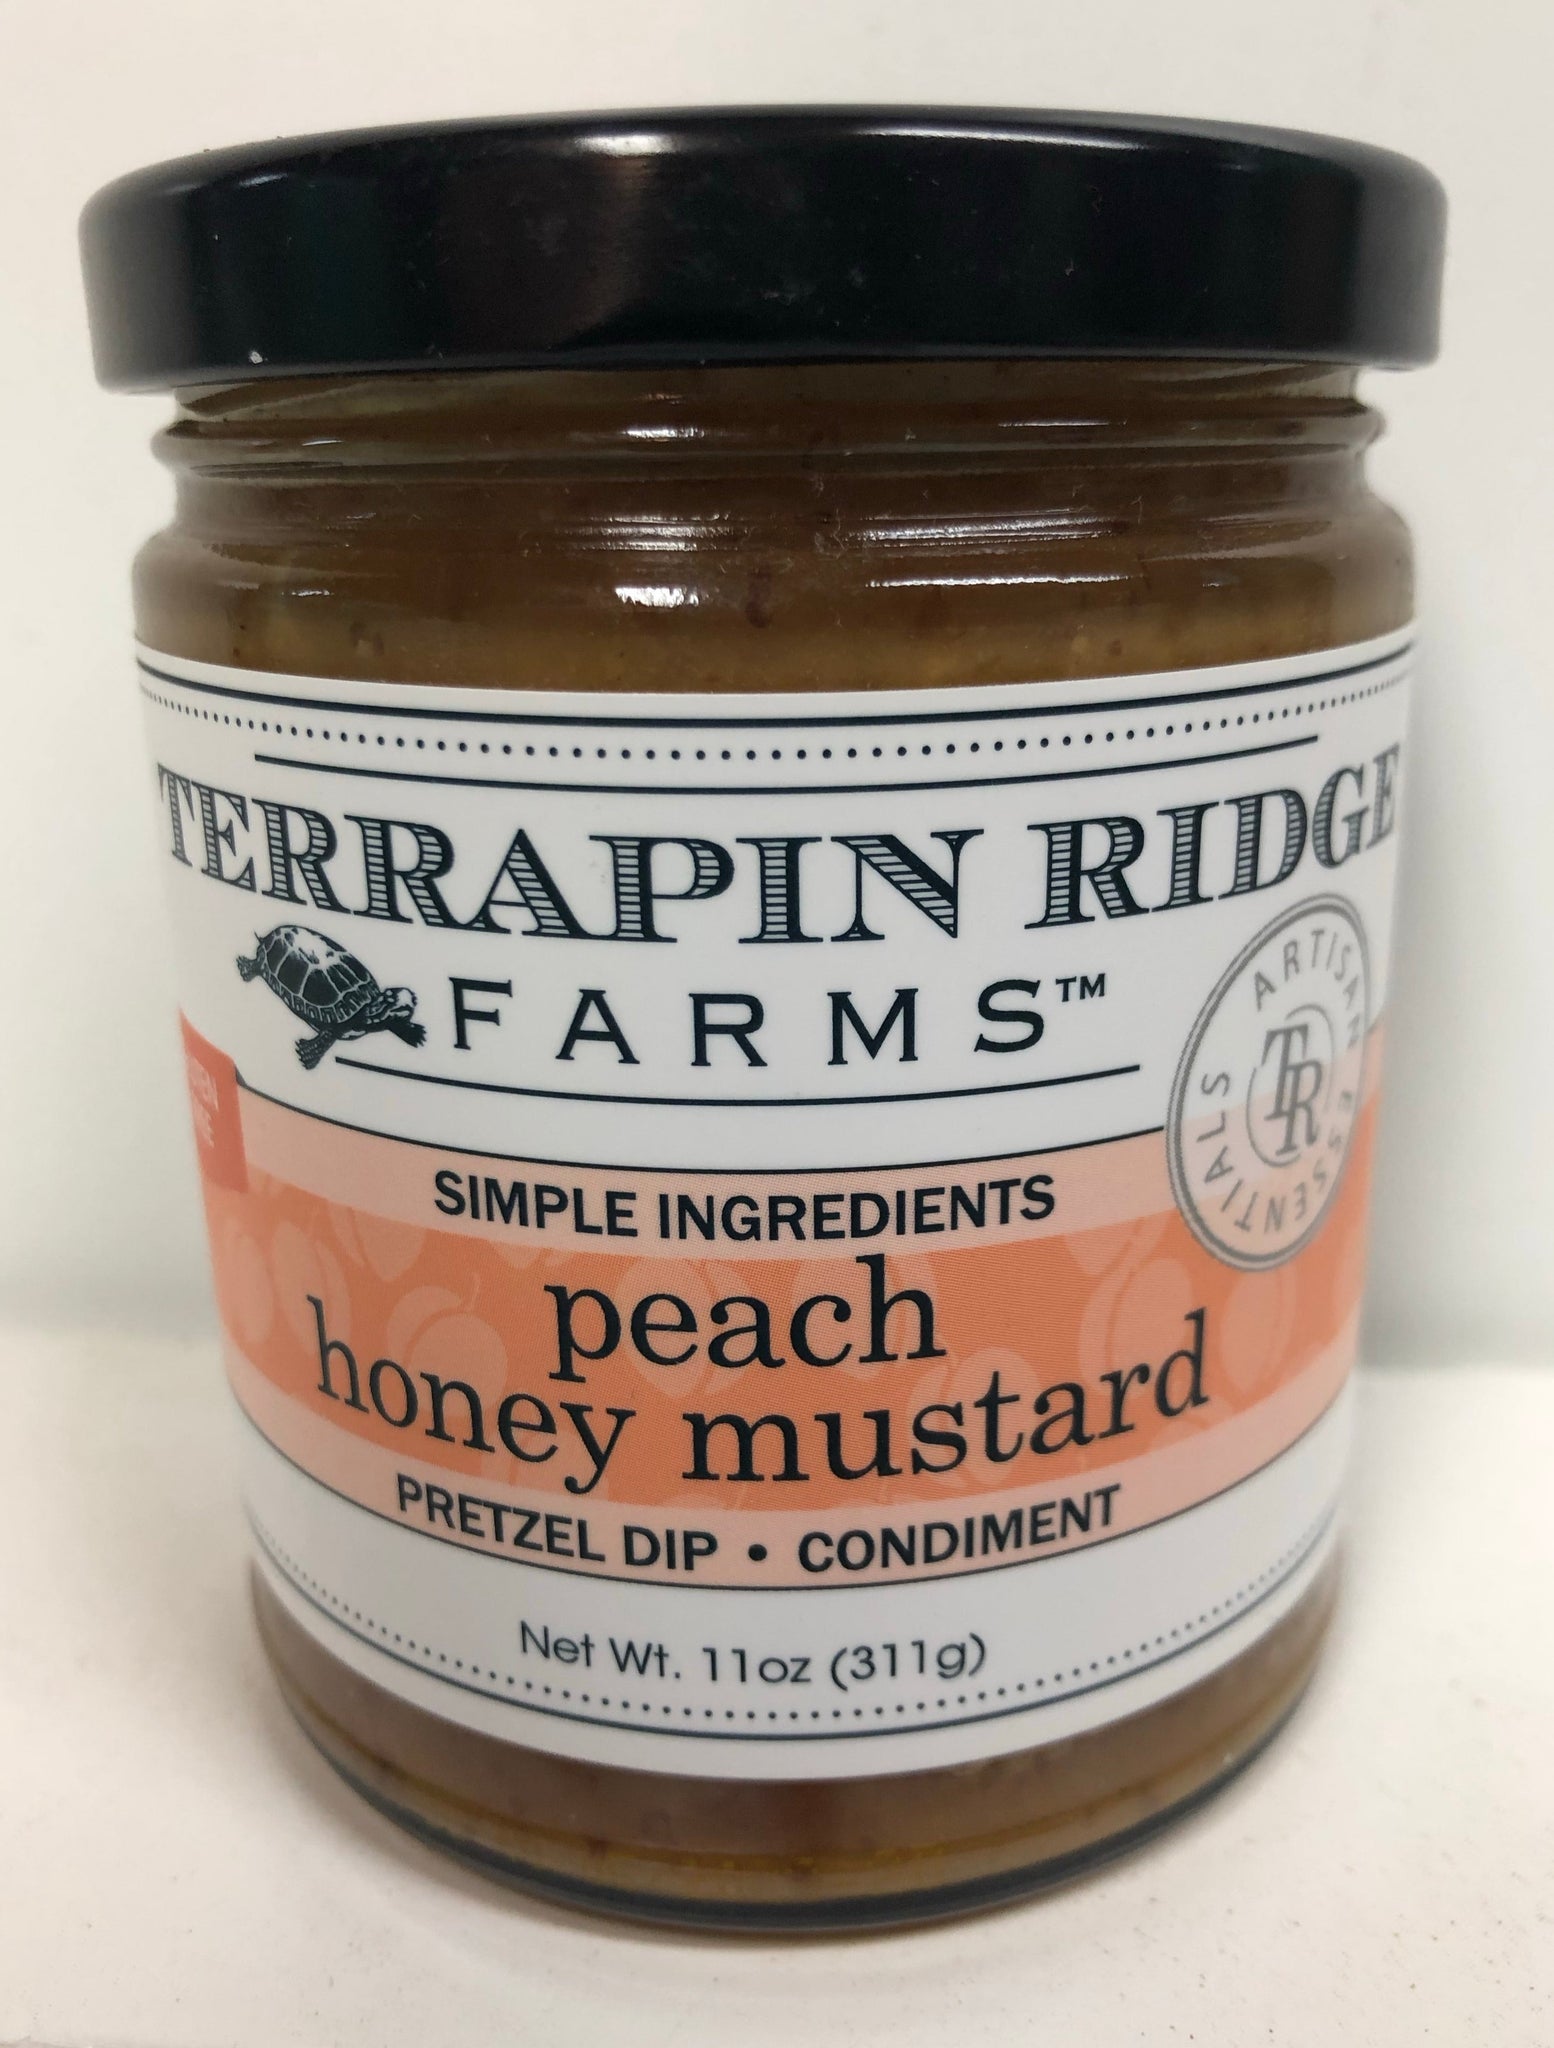 Peach Honey Mustard Pretzel Dip from Terrapin Ridge Farms